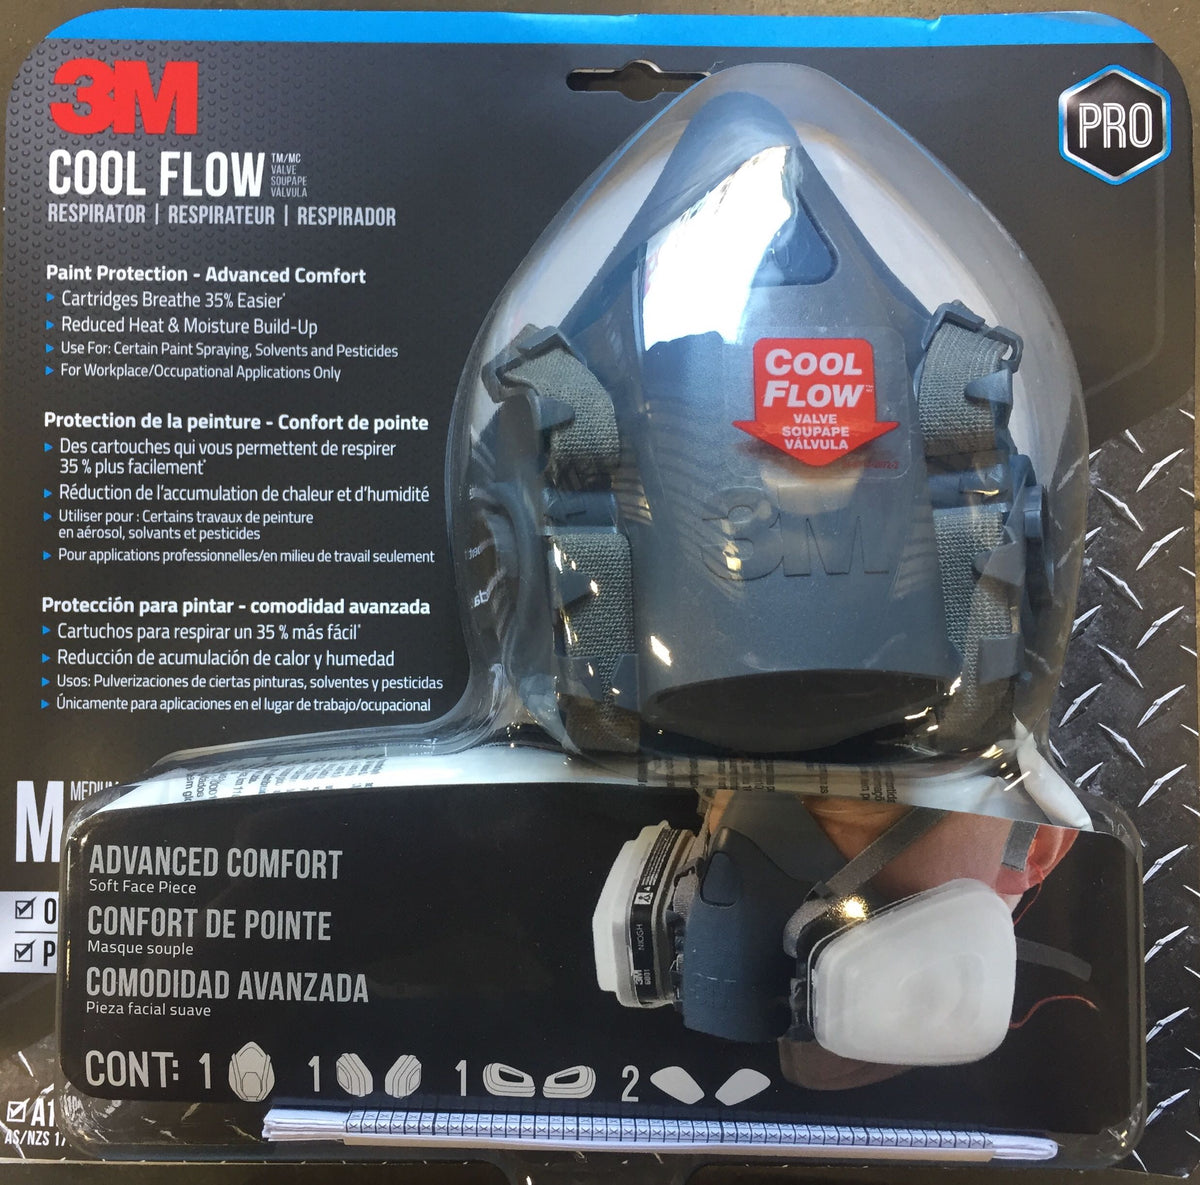 3M 7512PA1-A Professional Series Paint Sprayer P95 Valved Respirator, Medium